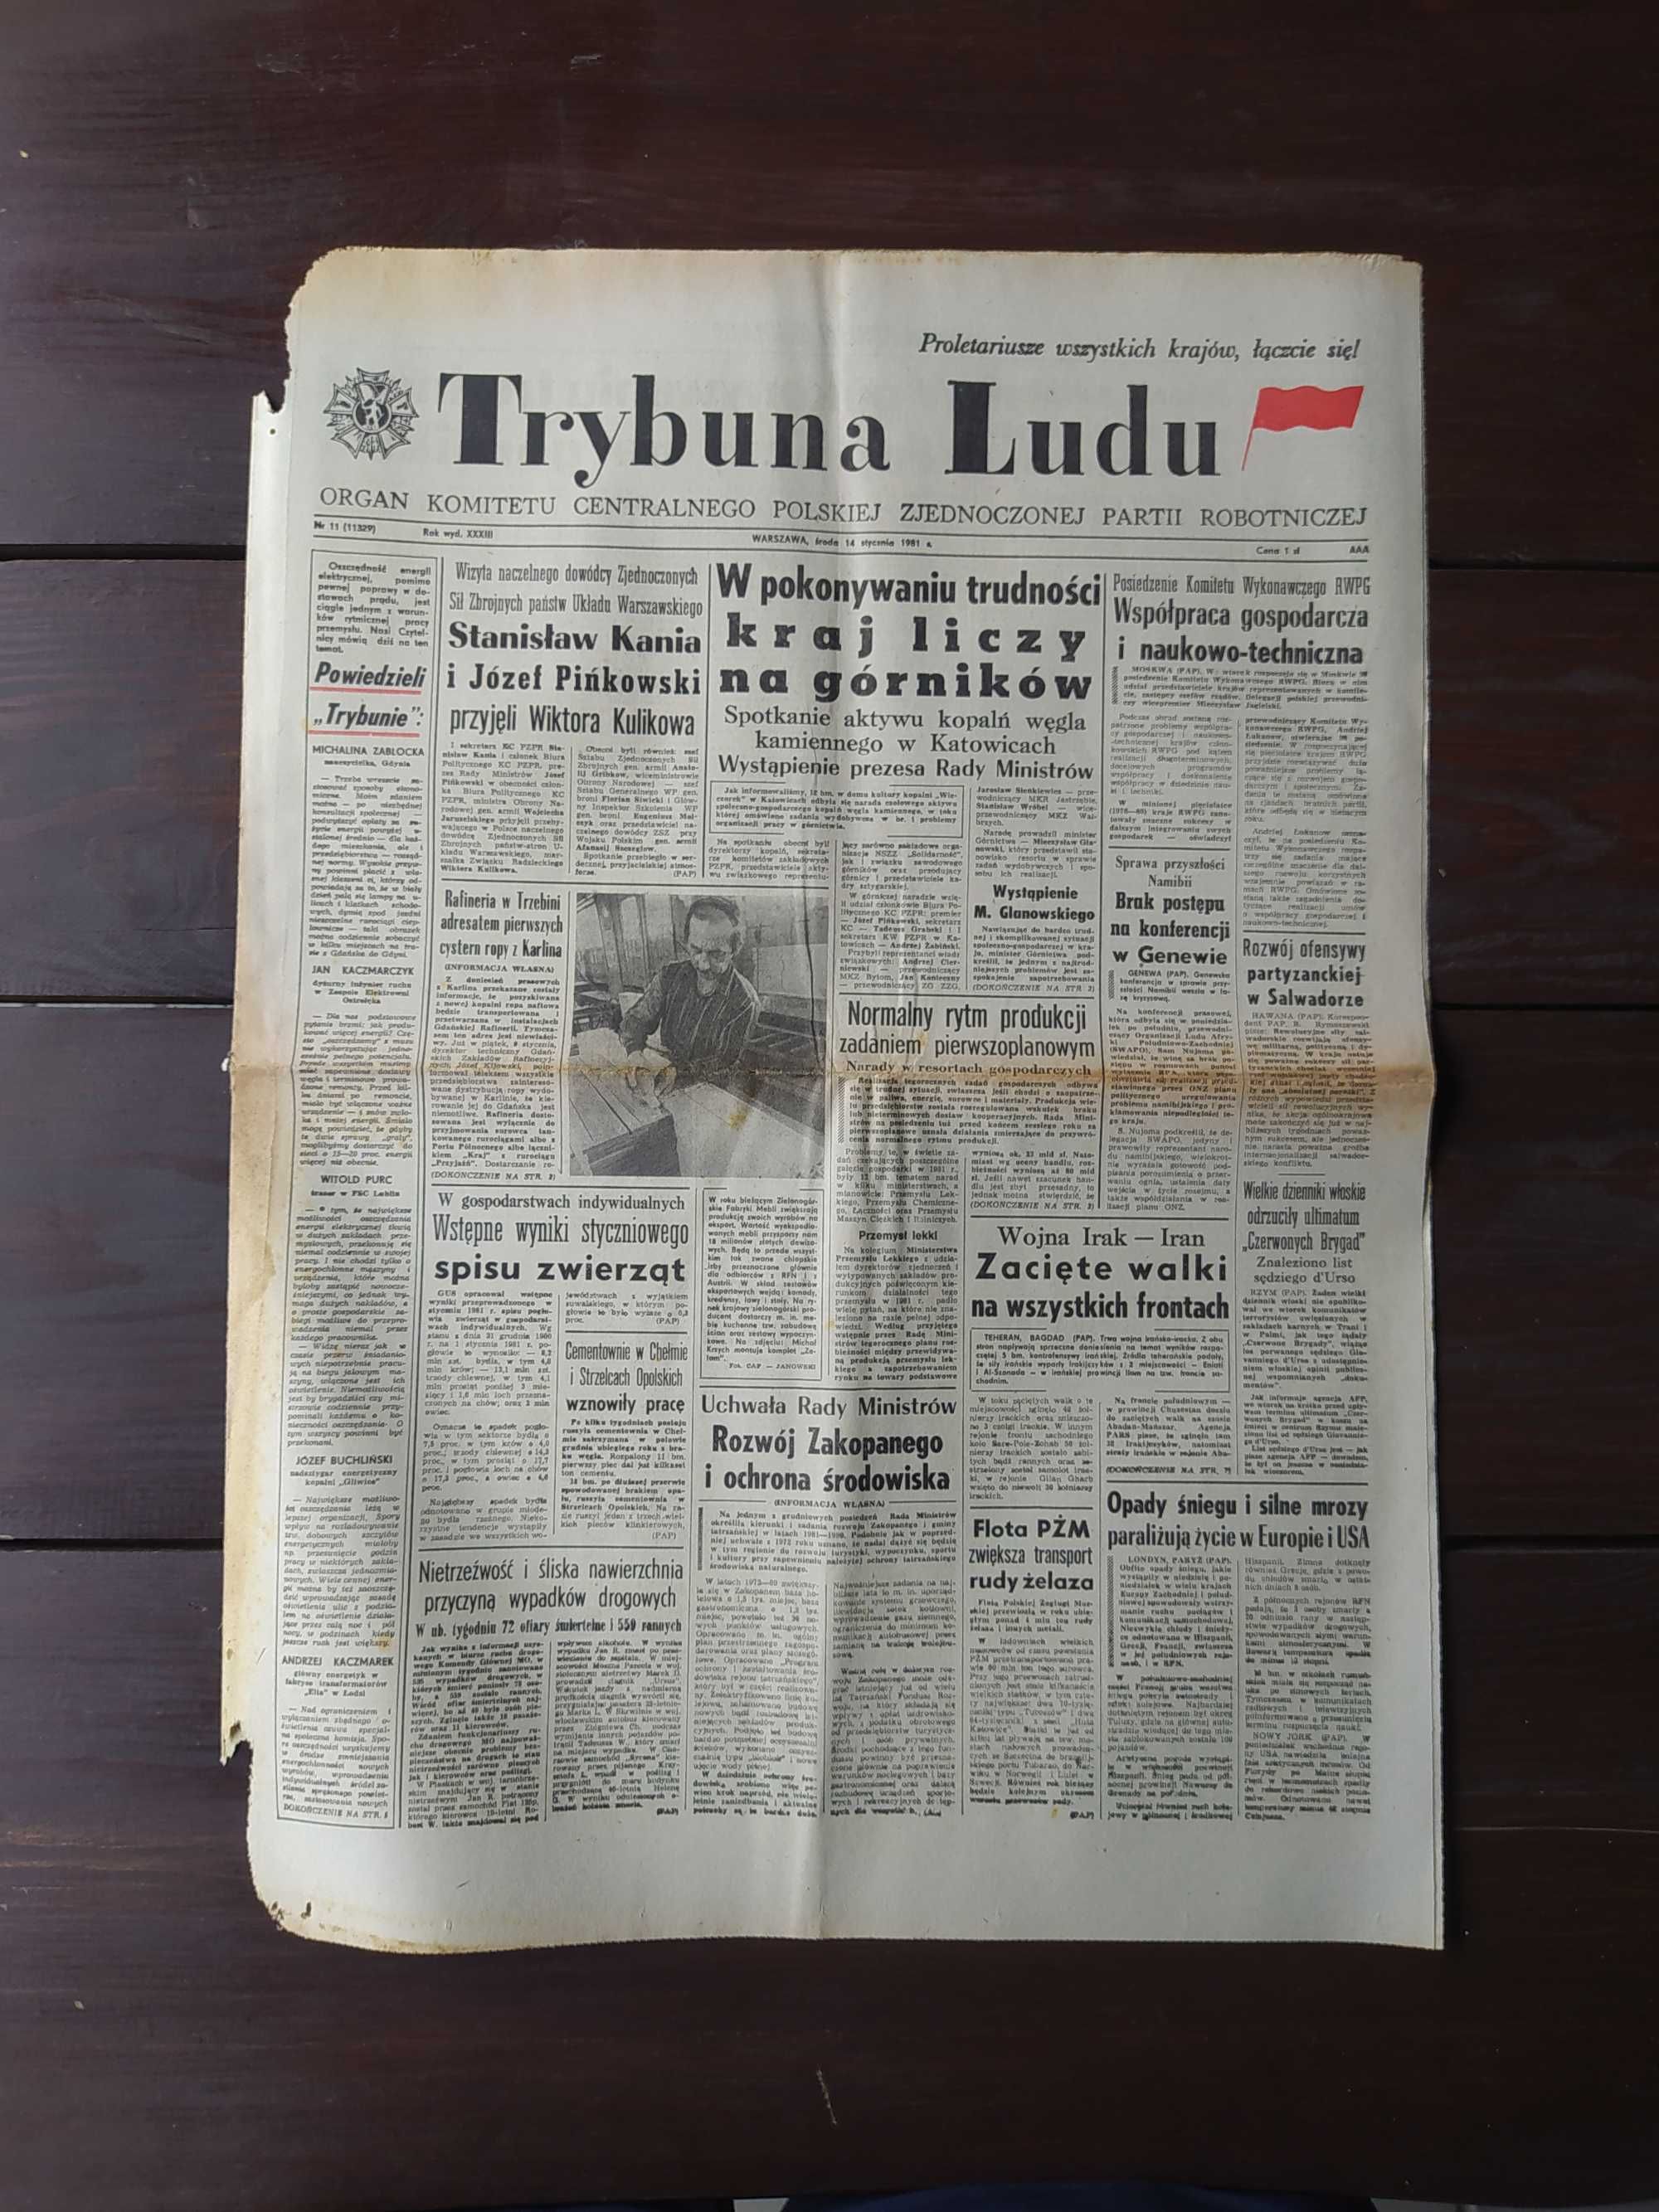 Gazeta TRYBUNA LUDU Nr 11 (11329), 14 I 1981r. PRL